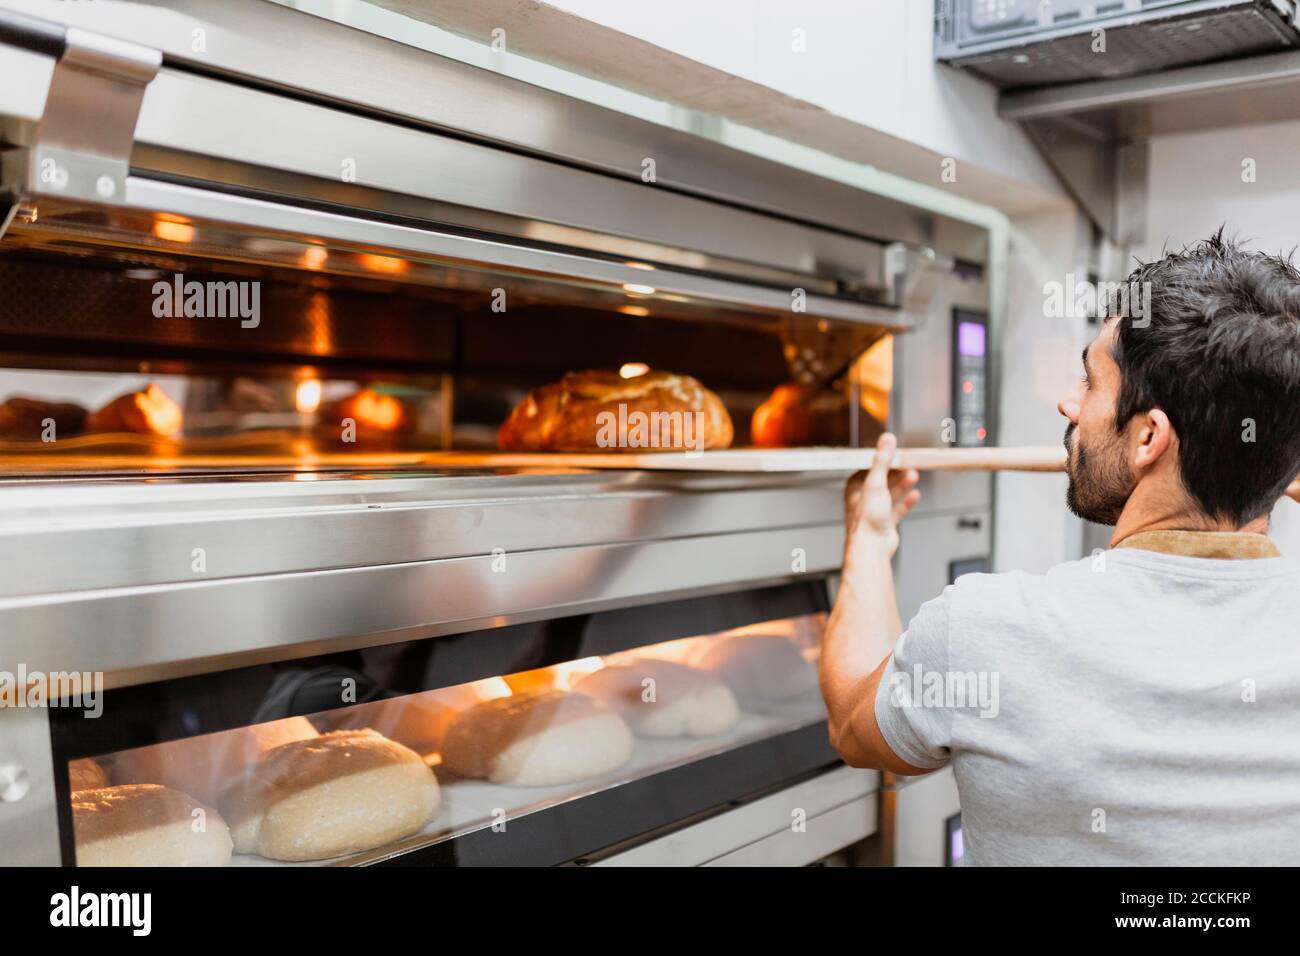 Baker baking bread in oven at bakery Stock Photo